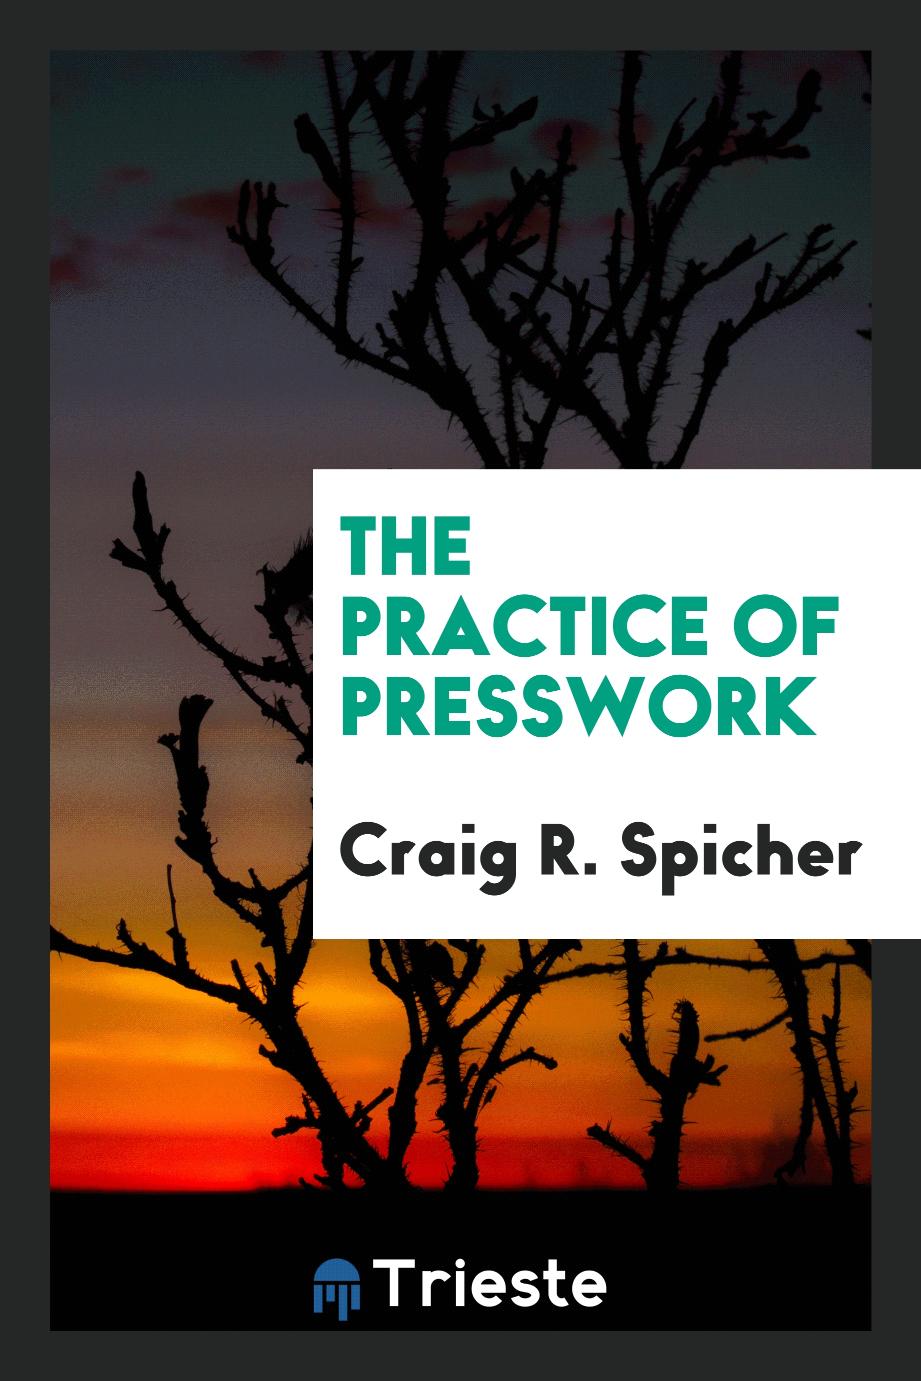 The practice of presswork